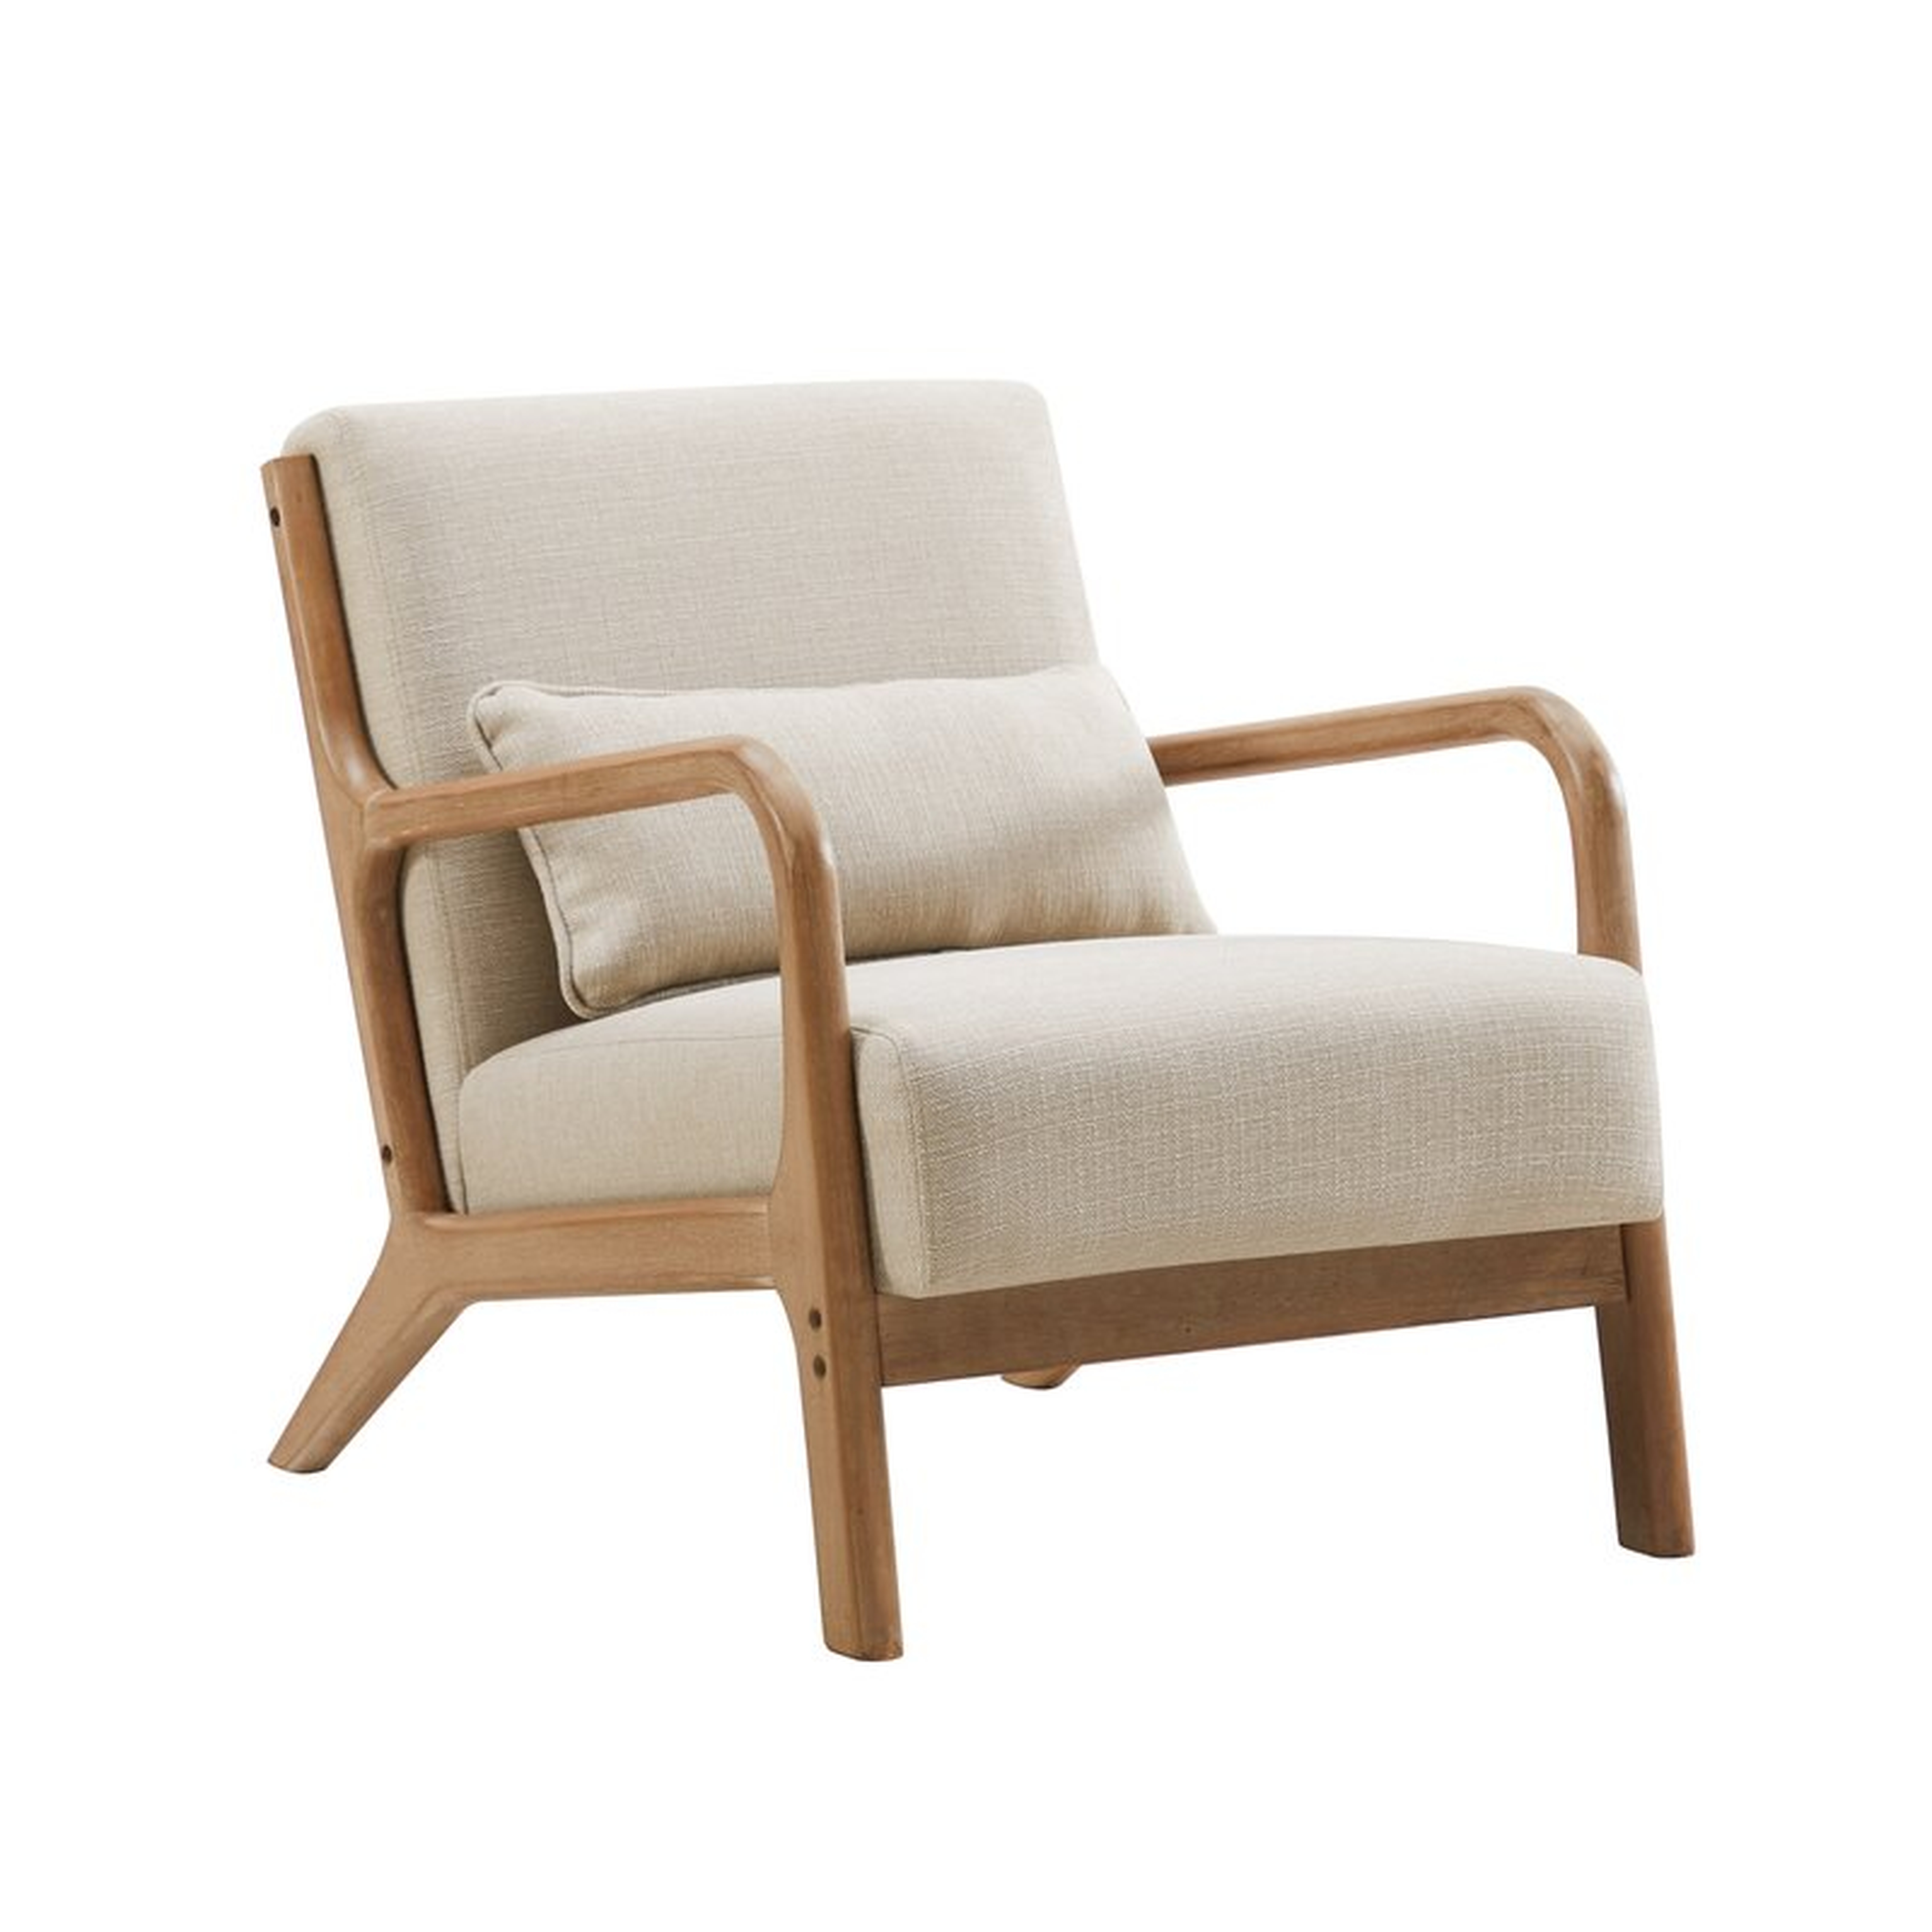 George Oliver Lounge Chair - Wayfair